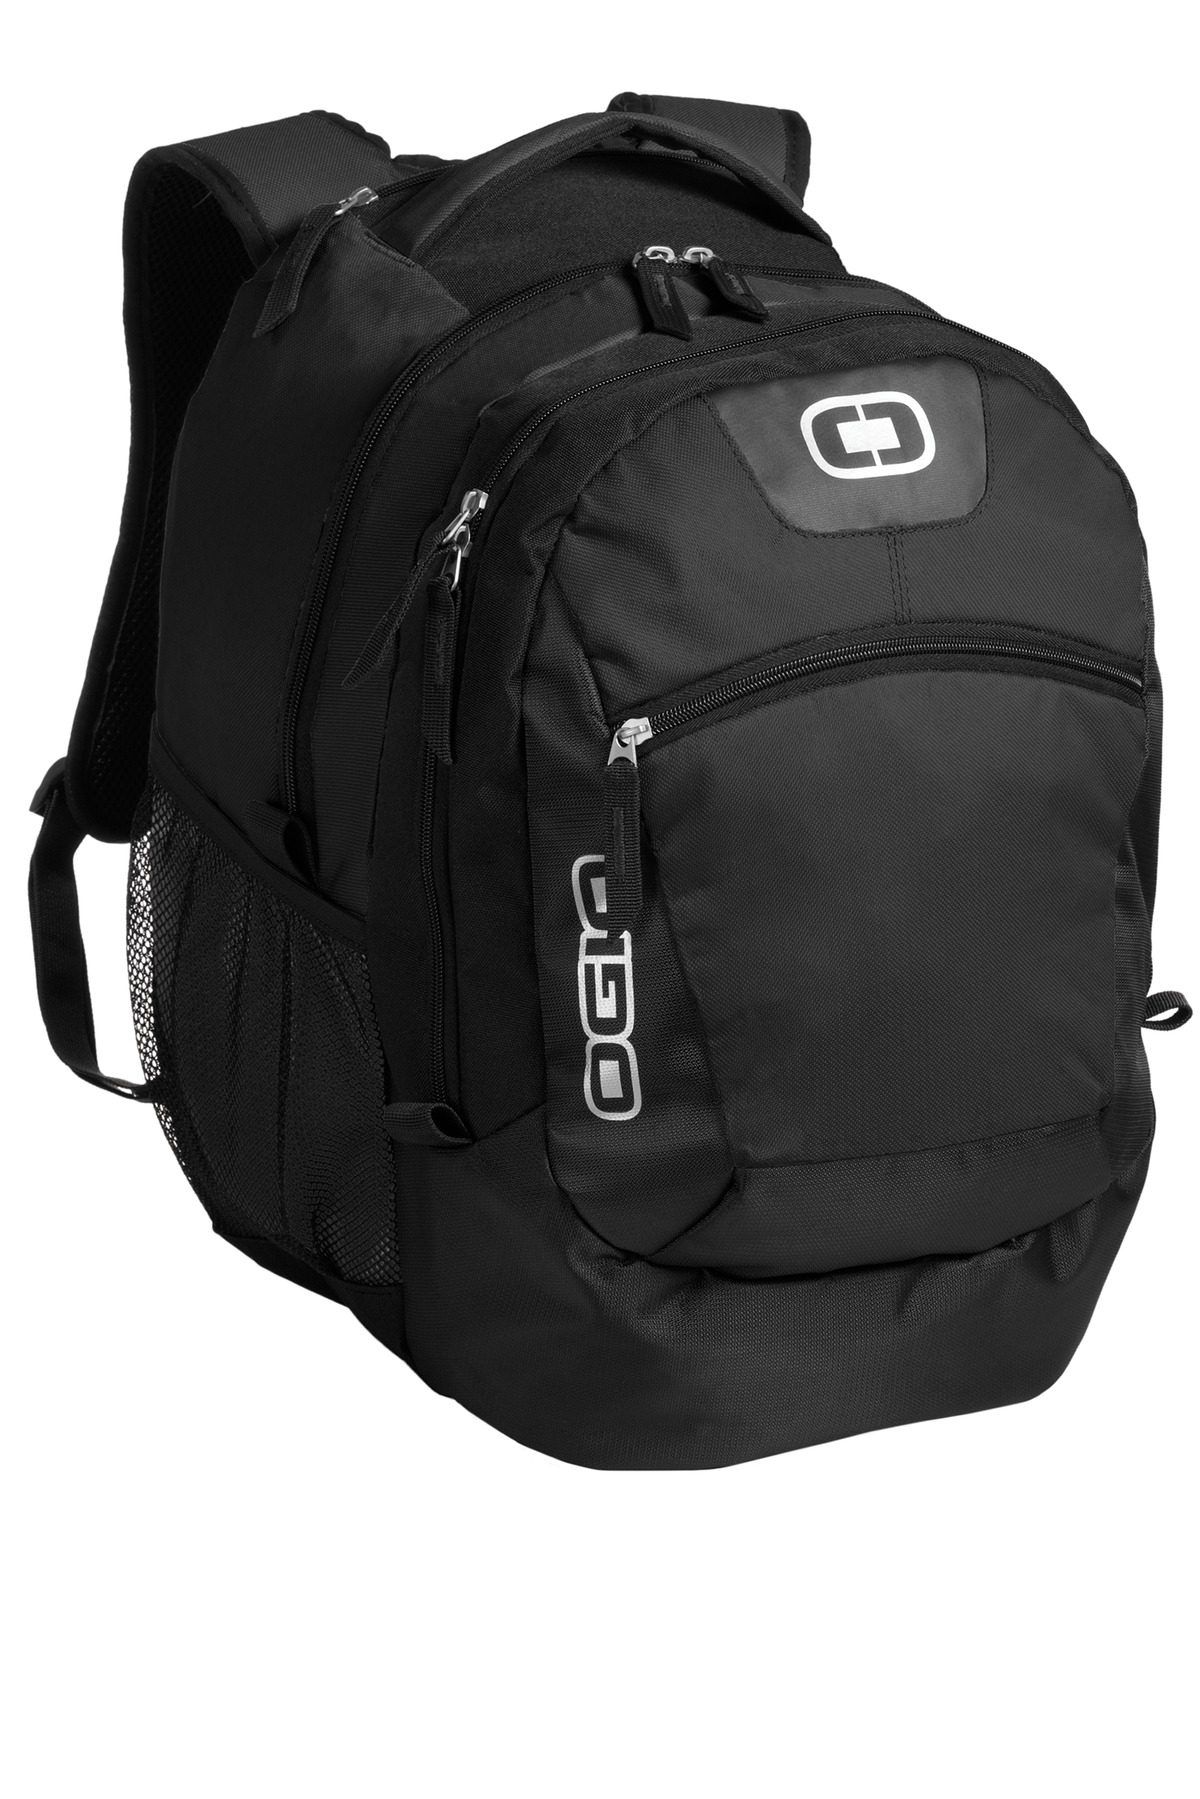 OGIO Hospitality Bags ® - Rogue Pack.-OGIO